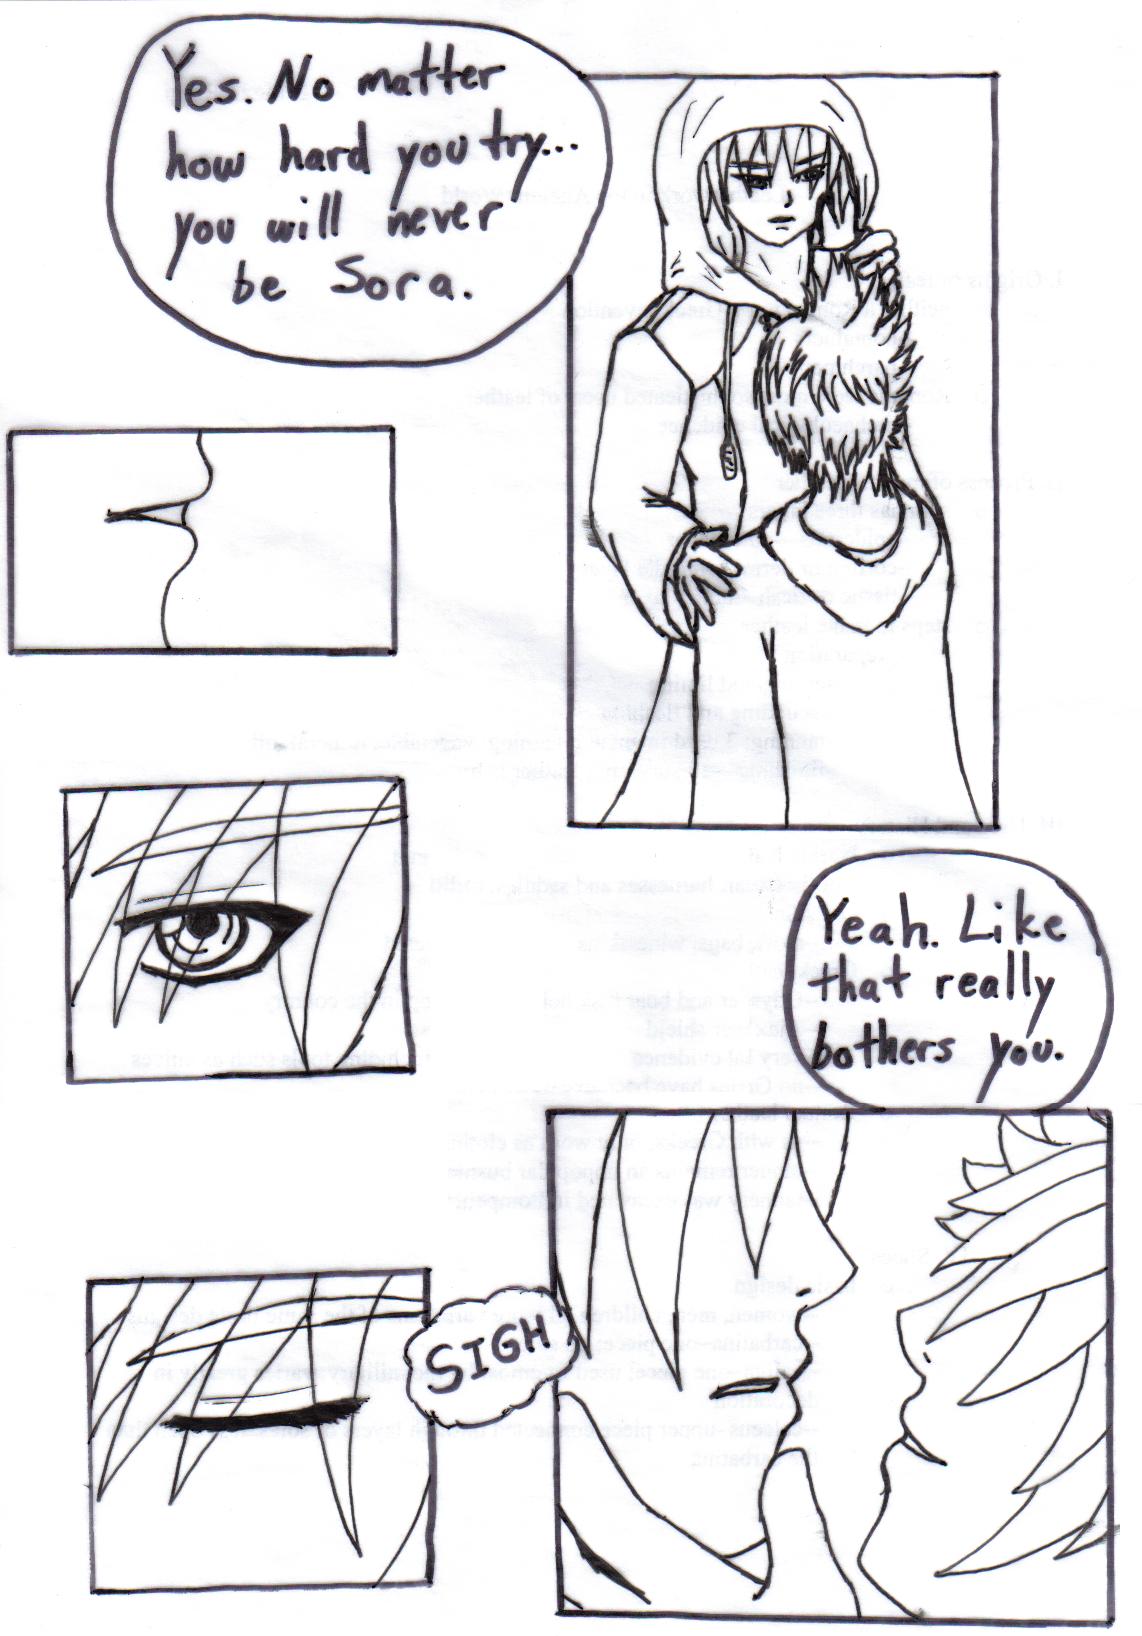 Doujinshi Page 2 by Emeraldwolf